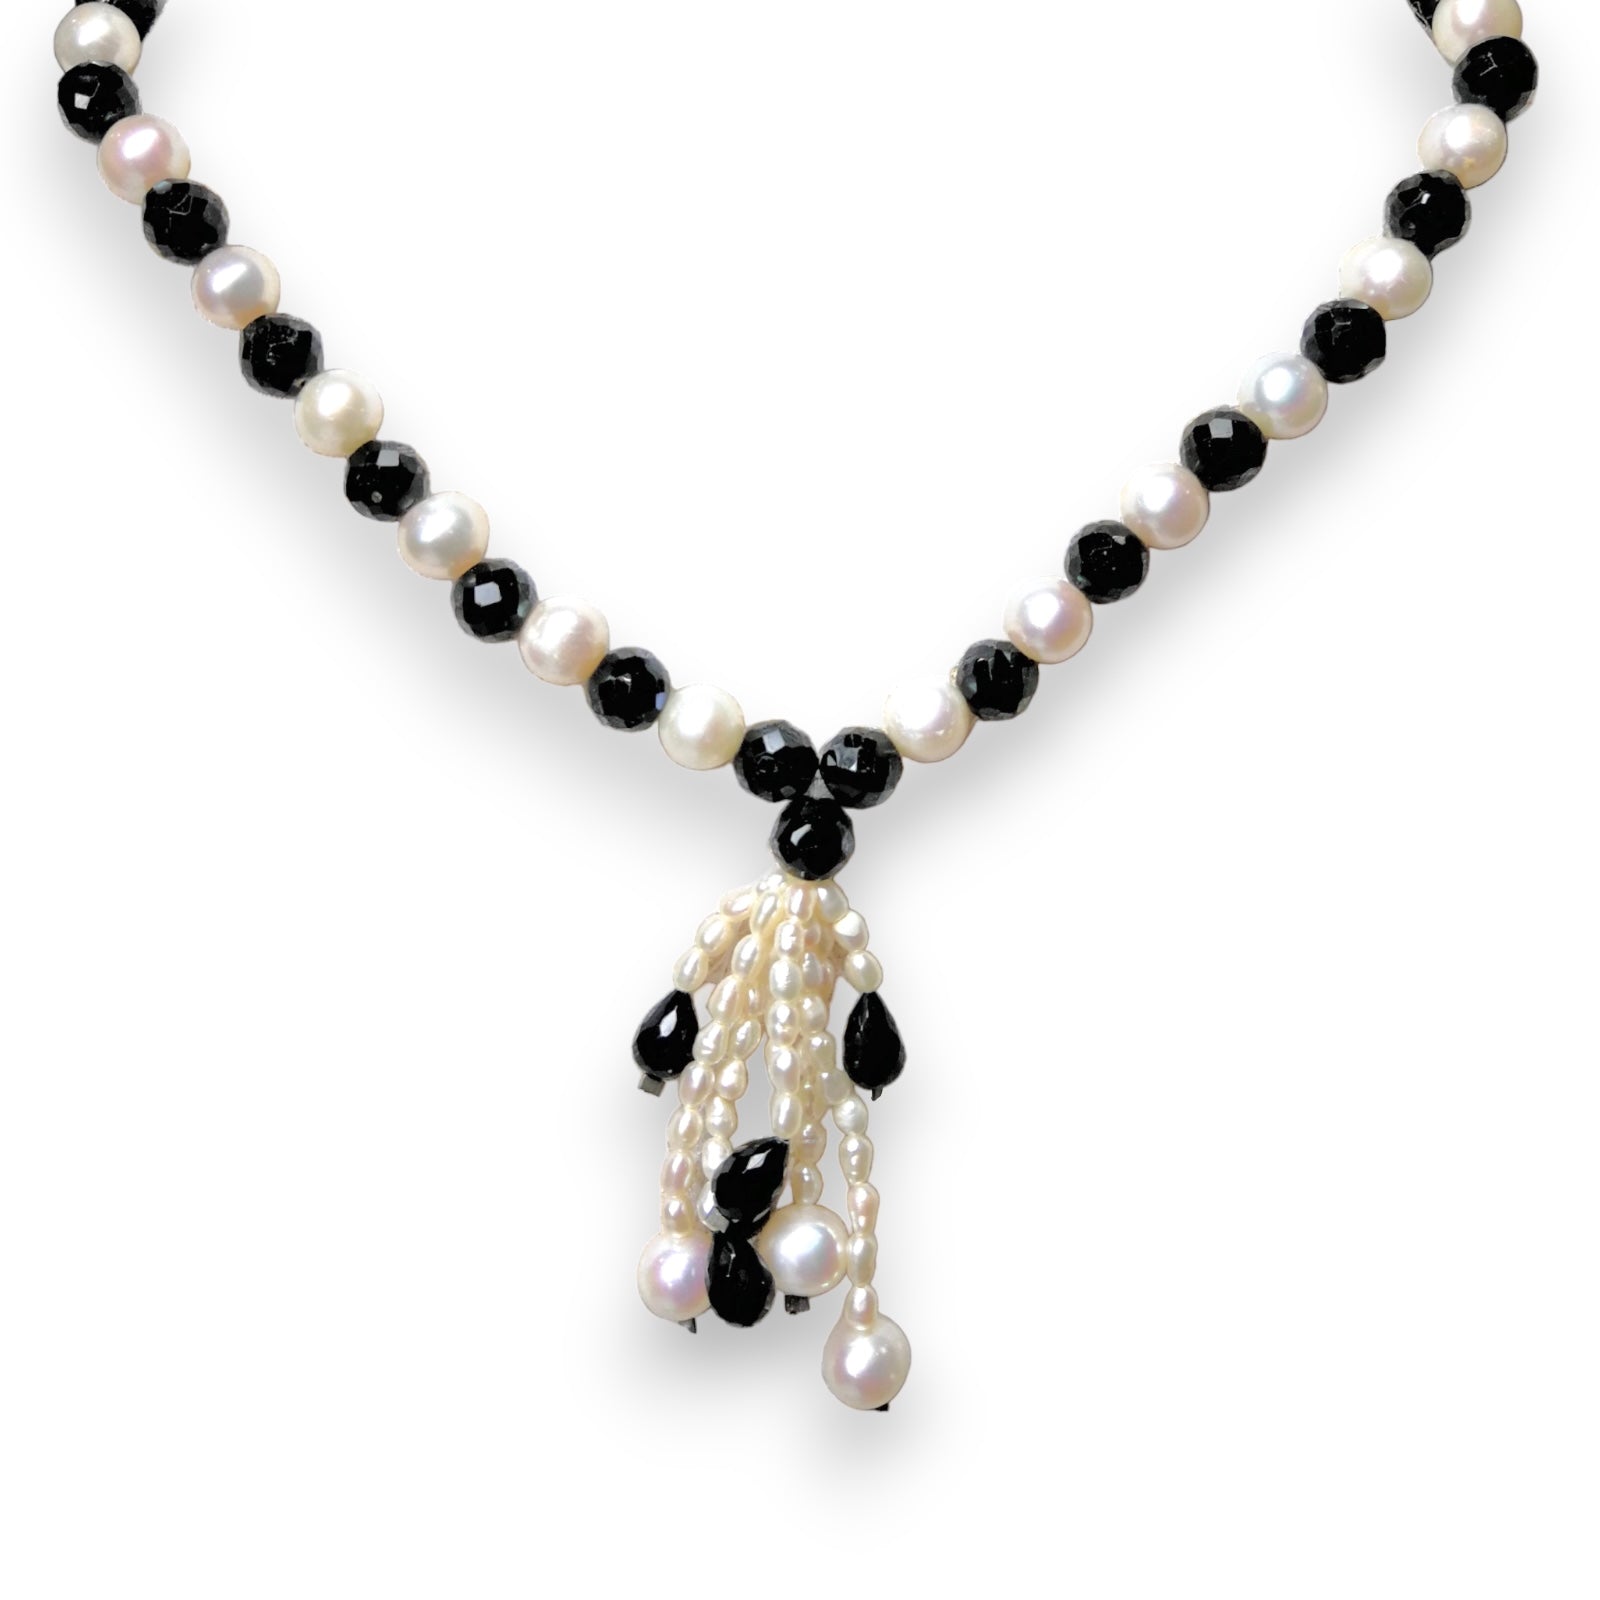 Natural Handmade Necklace Black Tourmaline and Pearls 16"-18" Gemstone Beads Jewelry